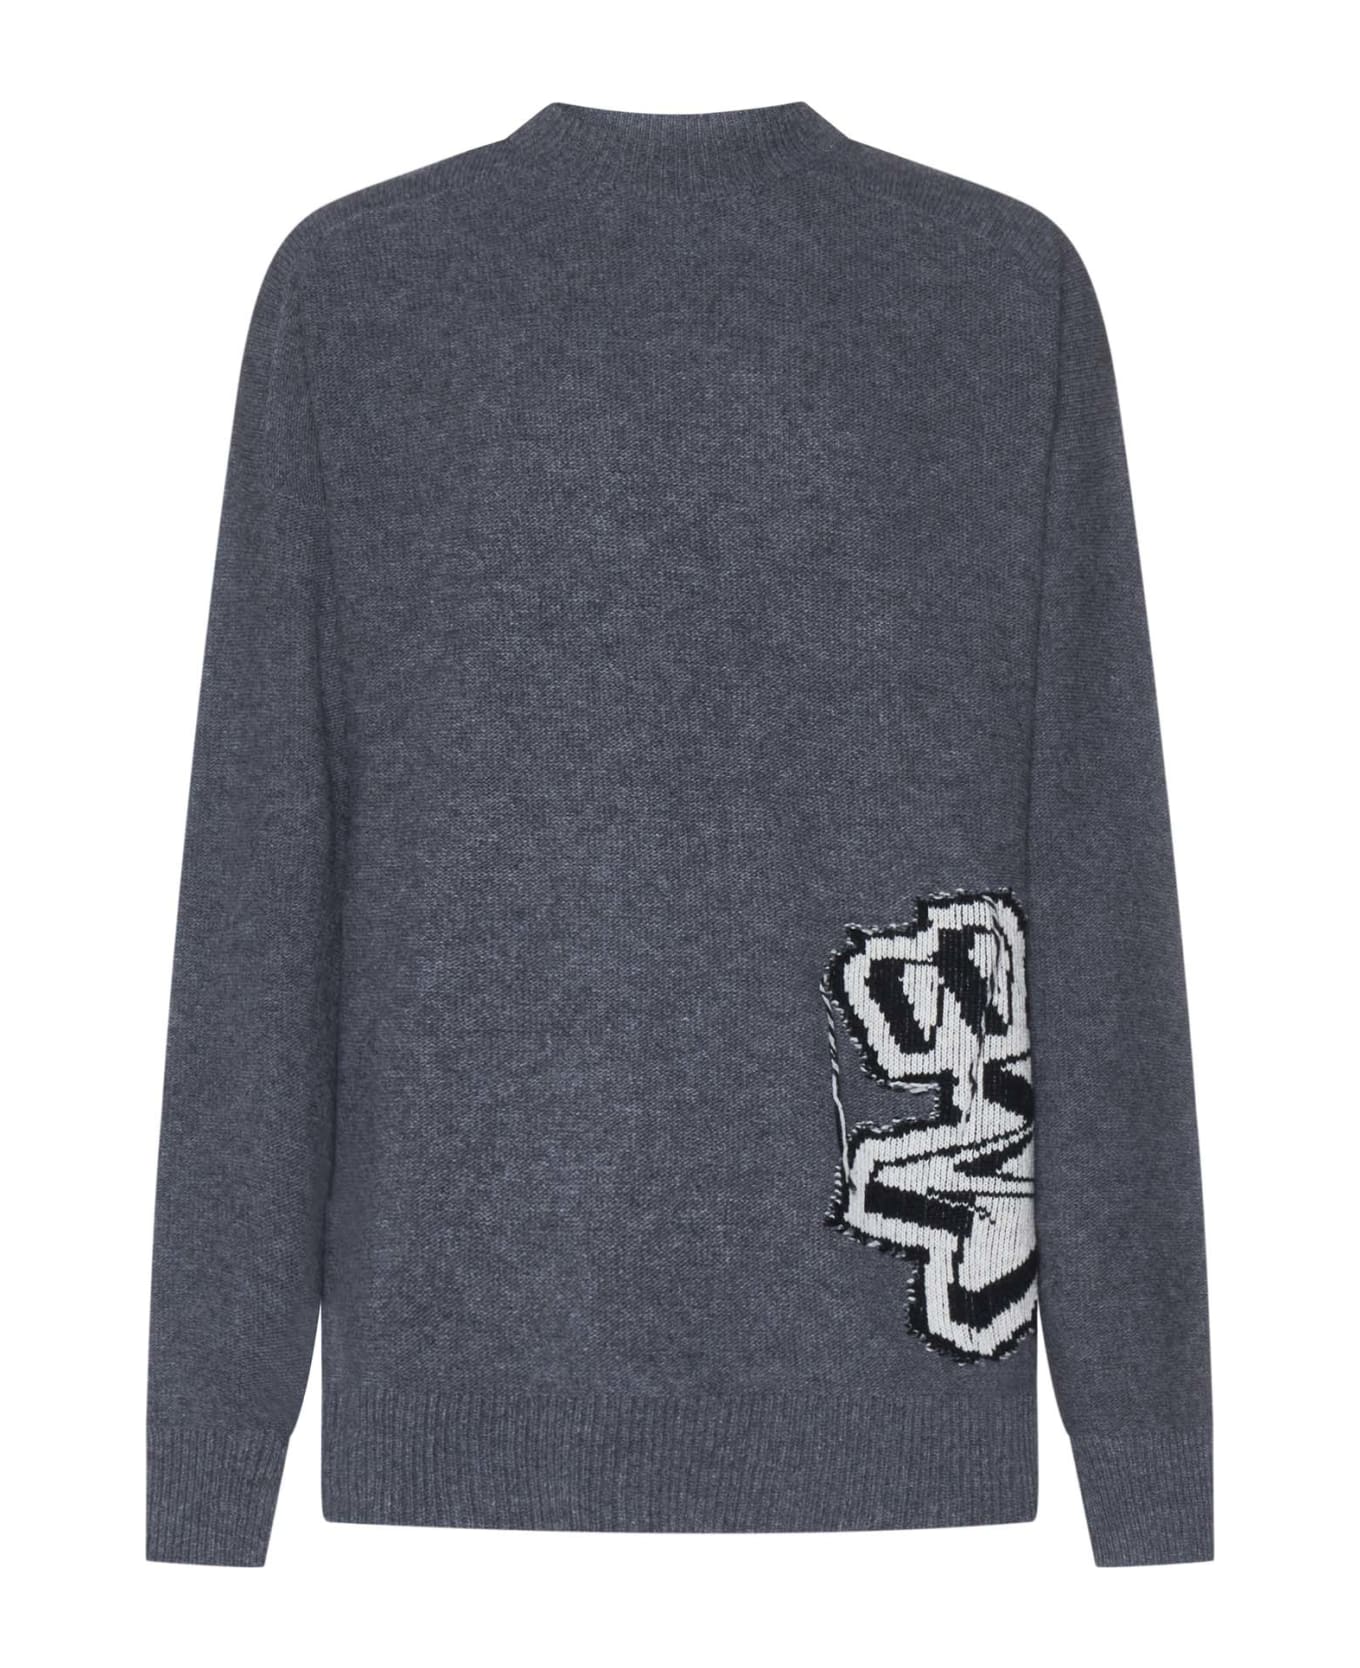 Off-White Sweater - Medium grey